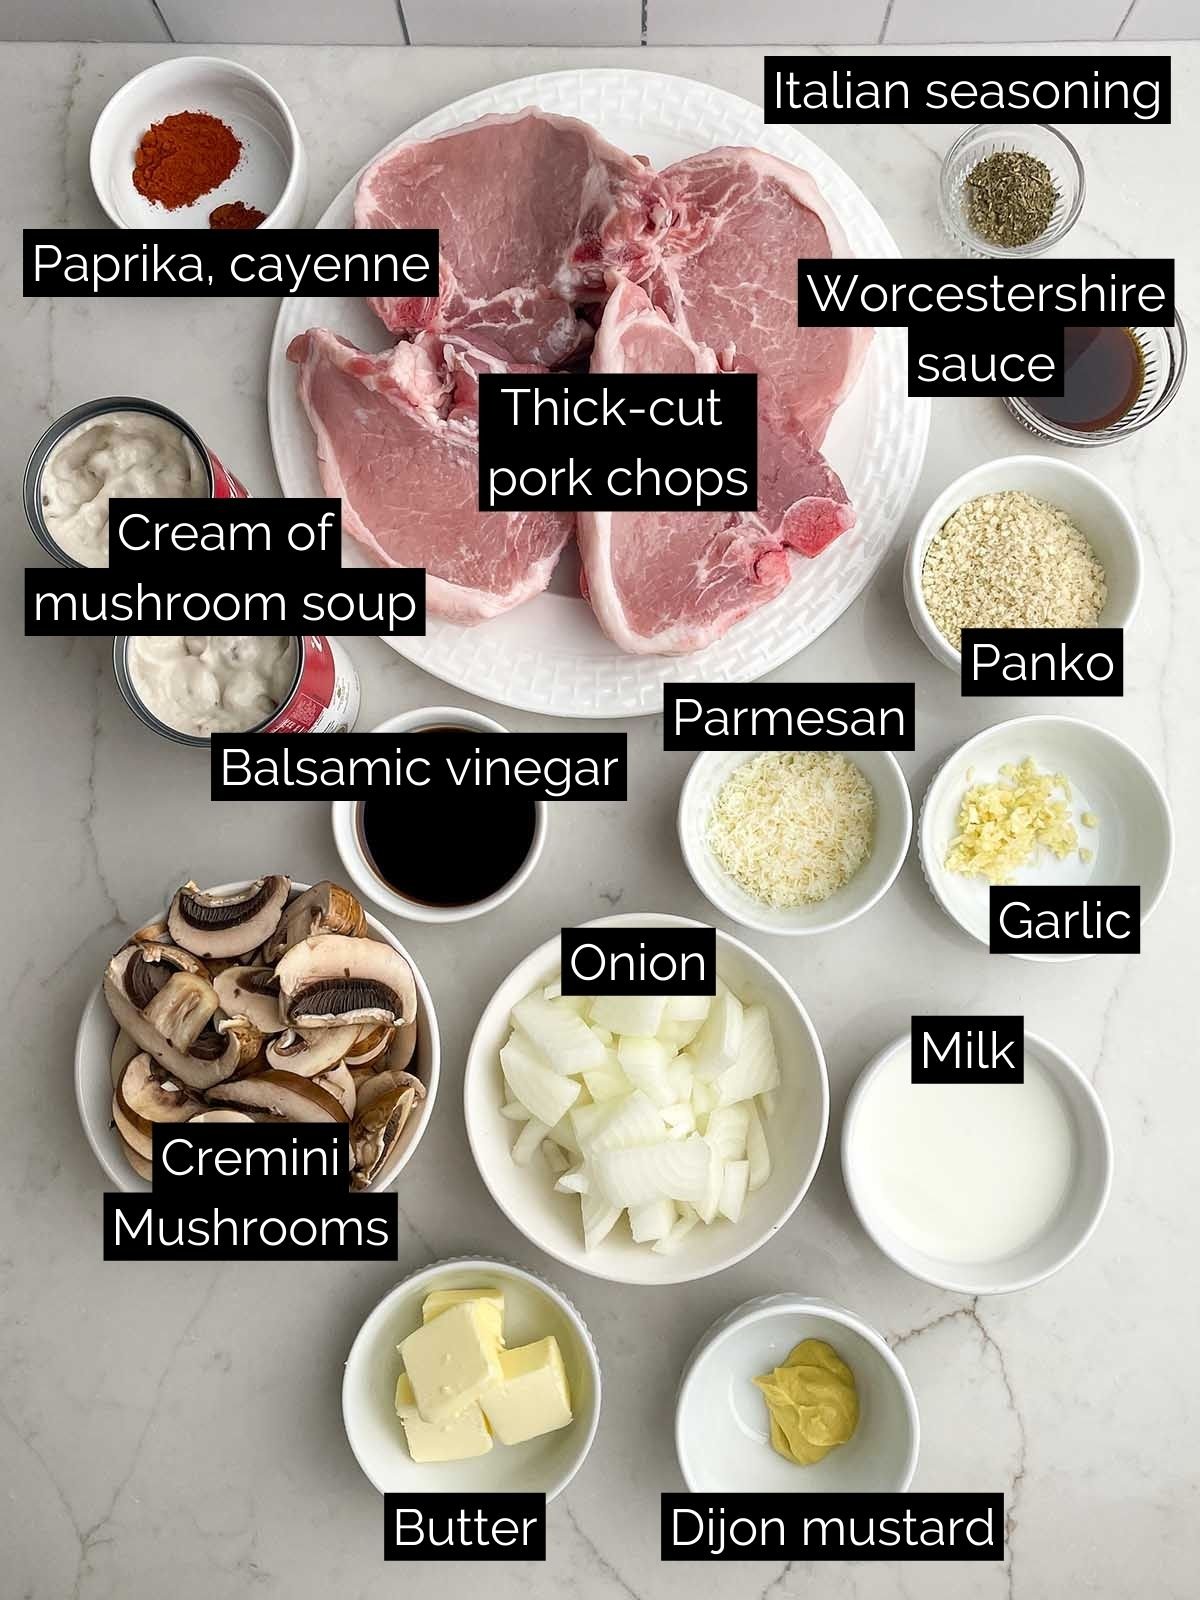 baked pork chops with cream of mushroom soup recipe ingredients.